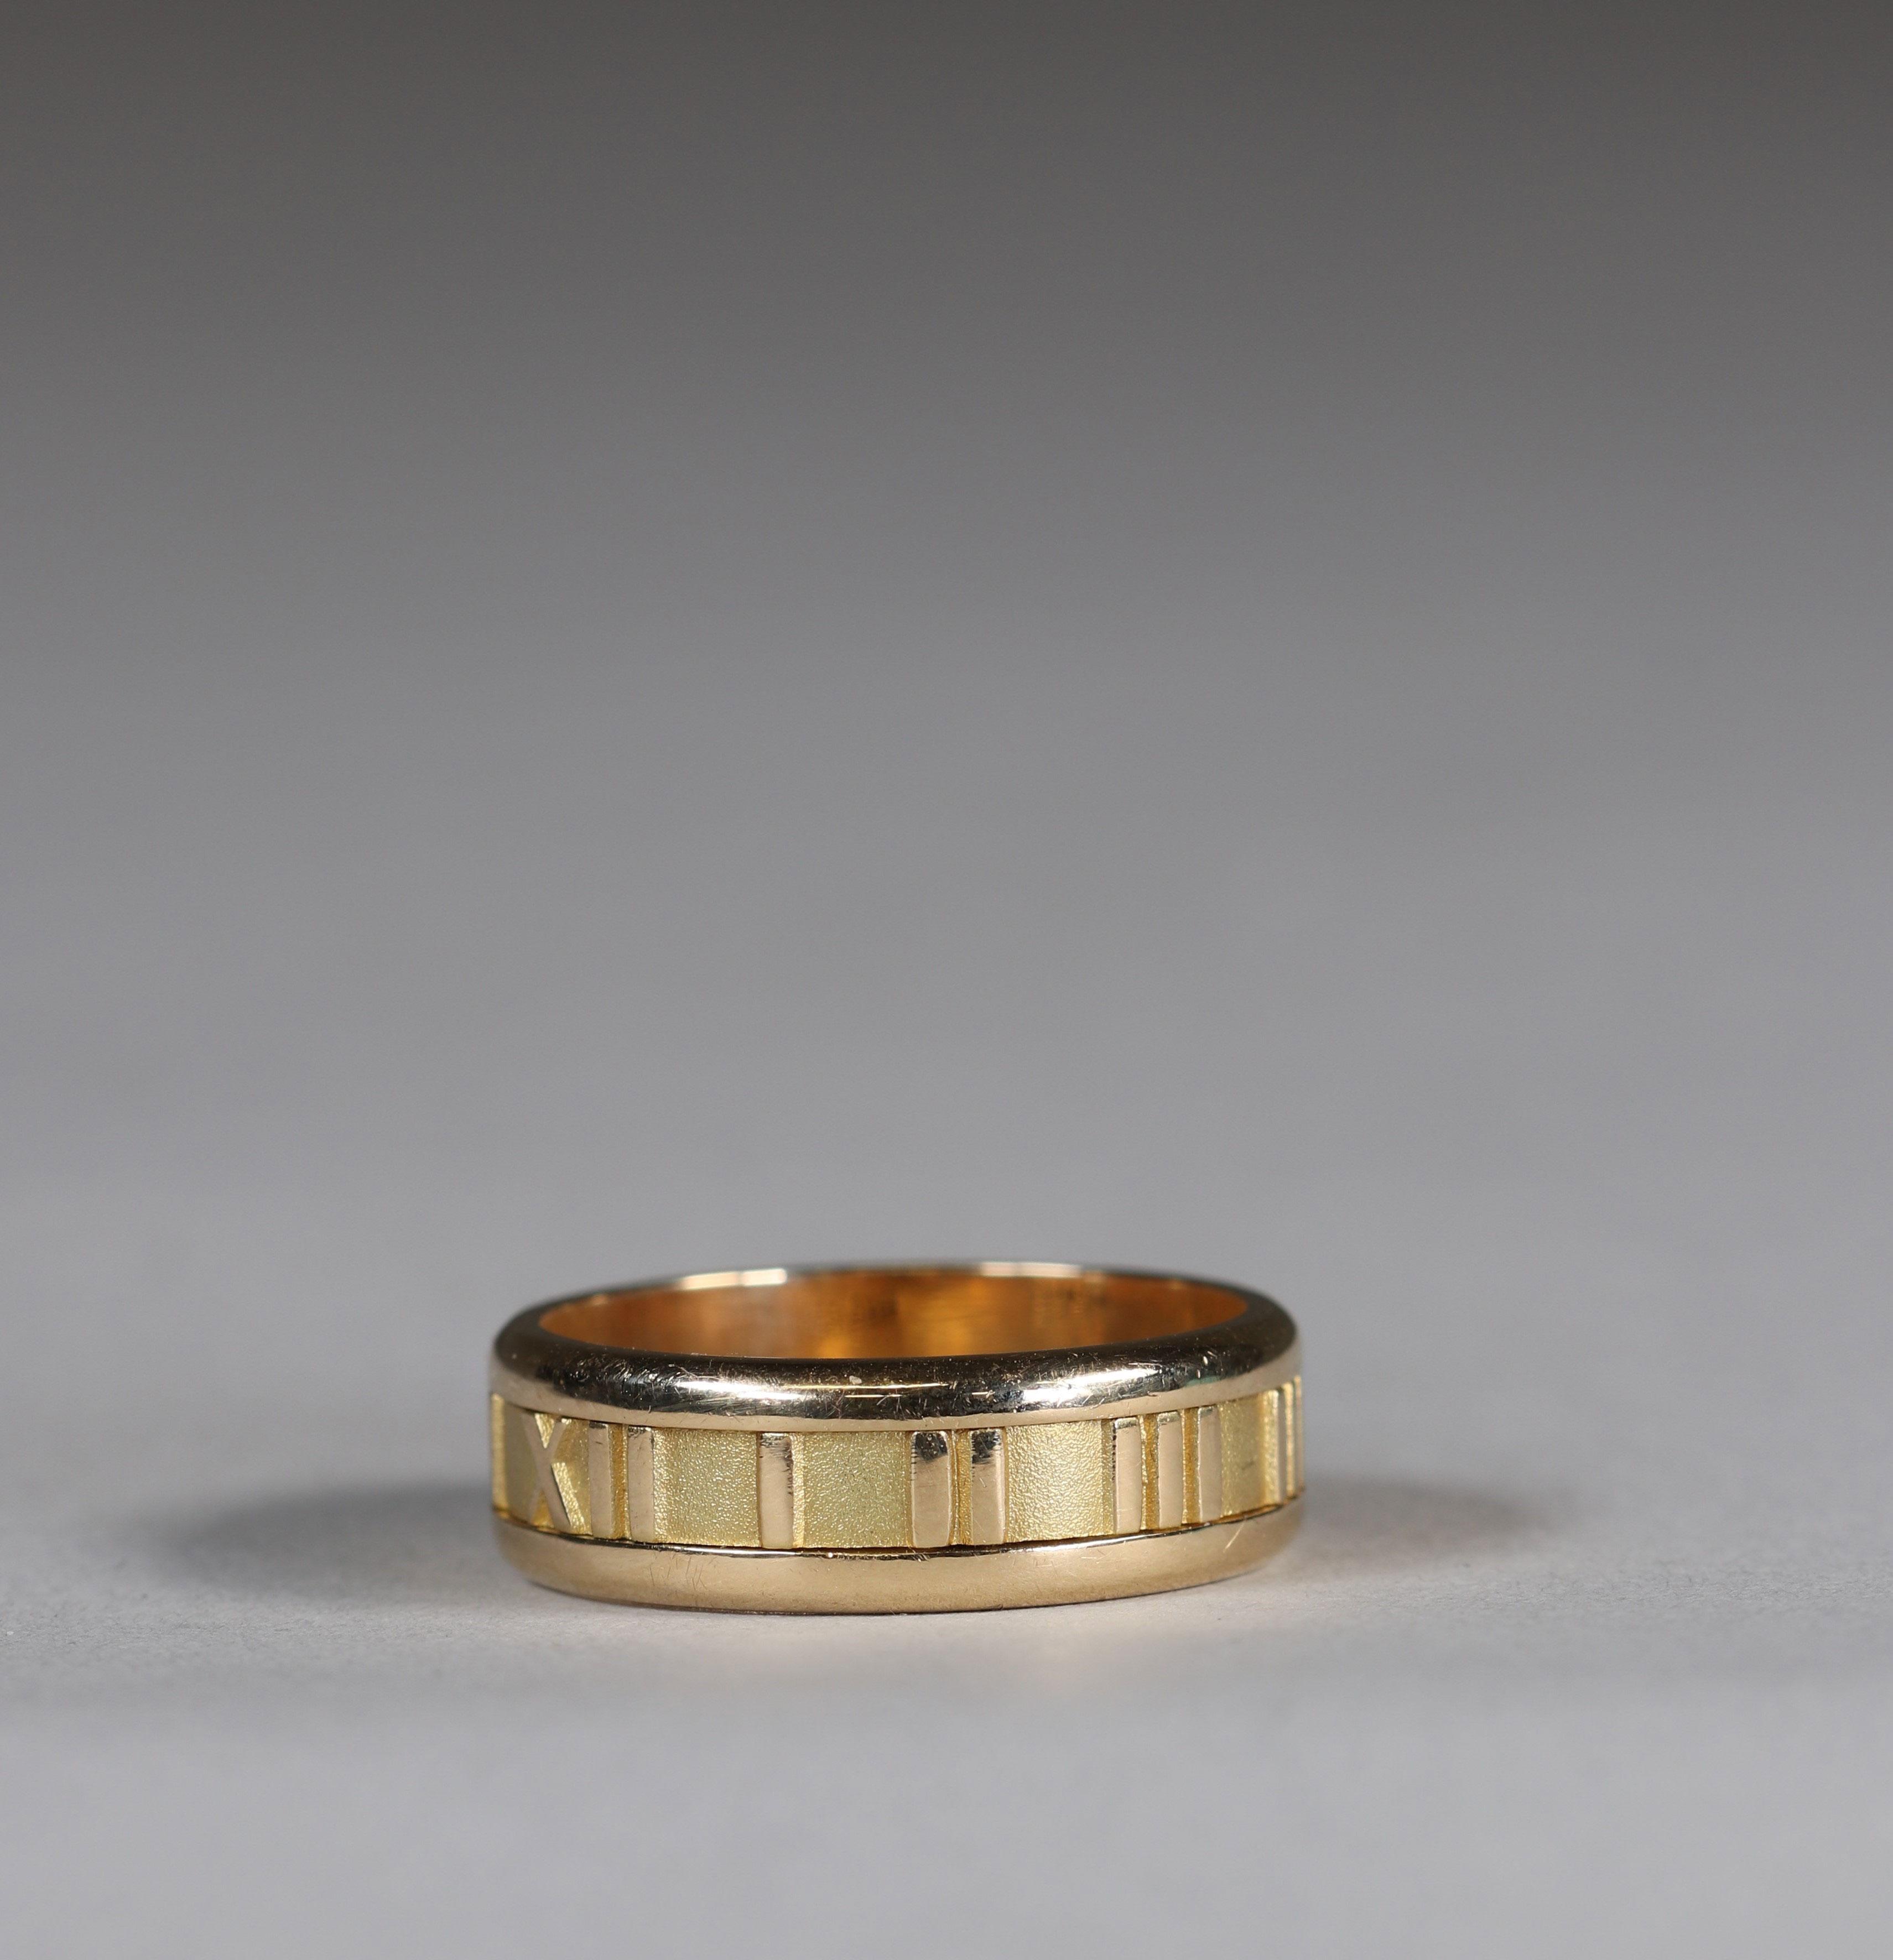 Tiffany 18k yellow gold ring - Image 2 of 3